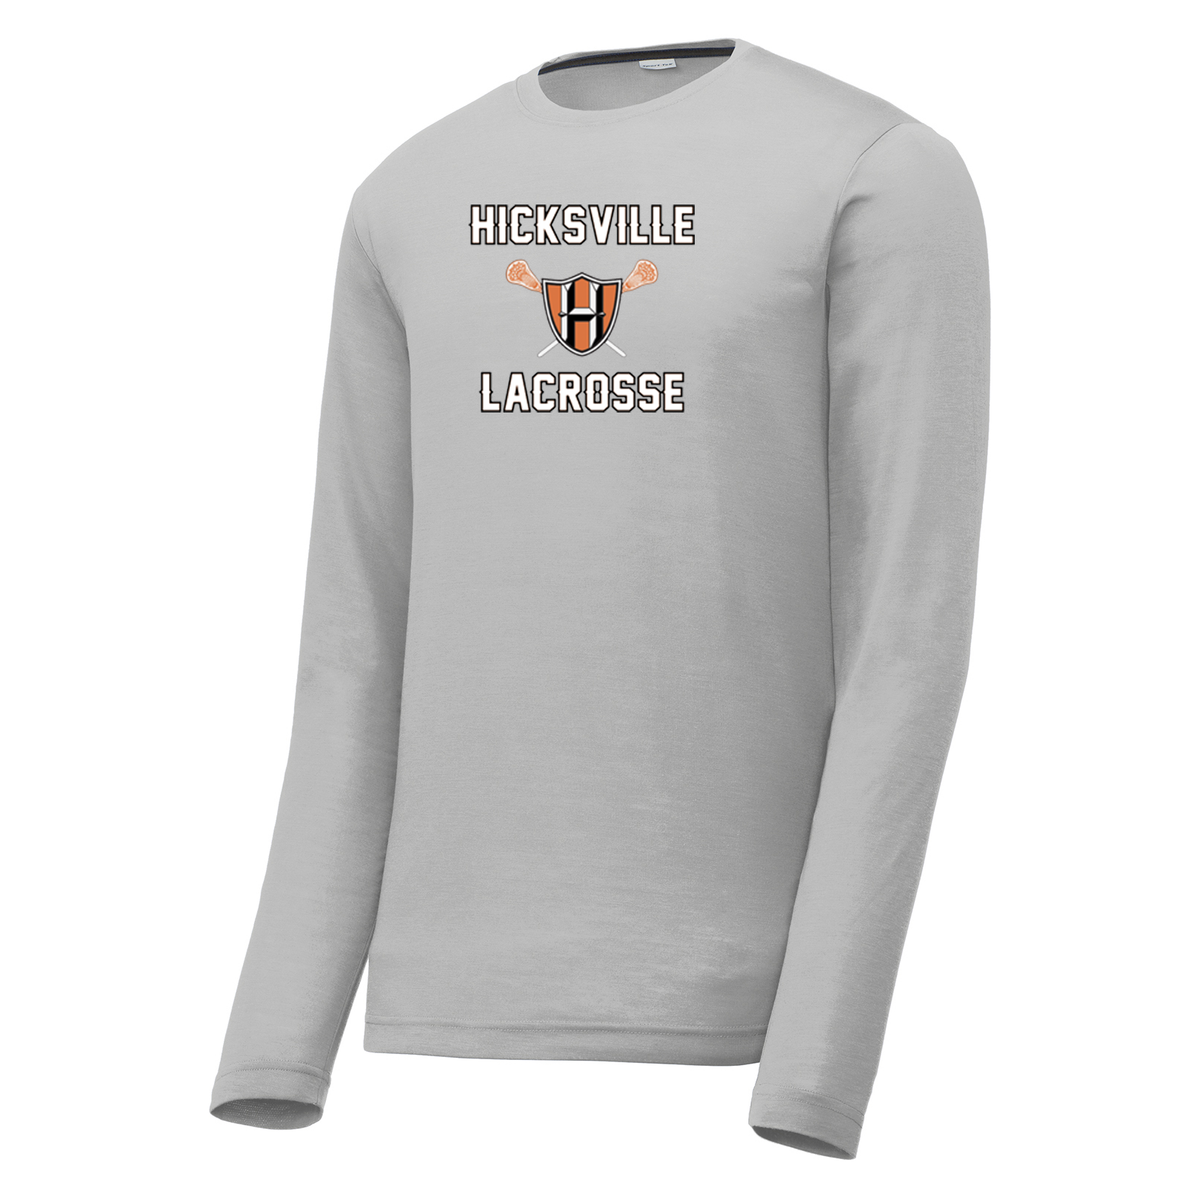 Hicksville Lacrosse  Long Sleeve CottonTouch Performance Shirt